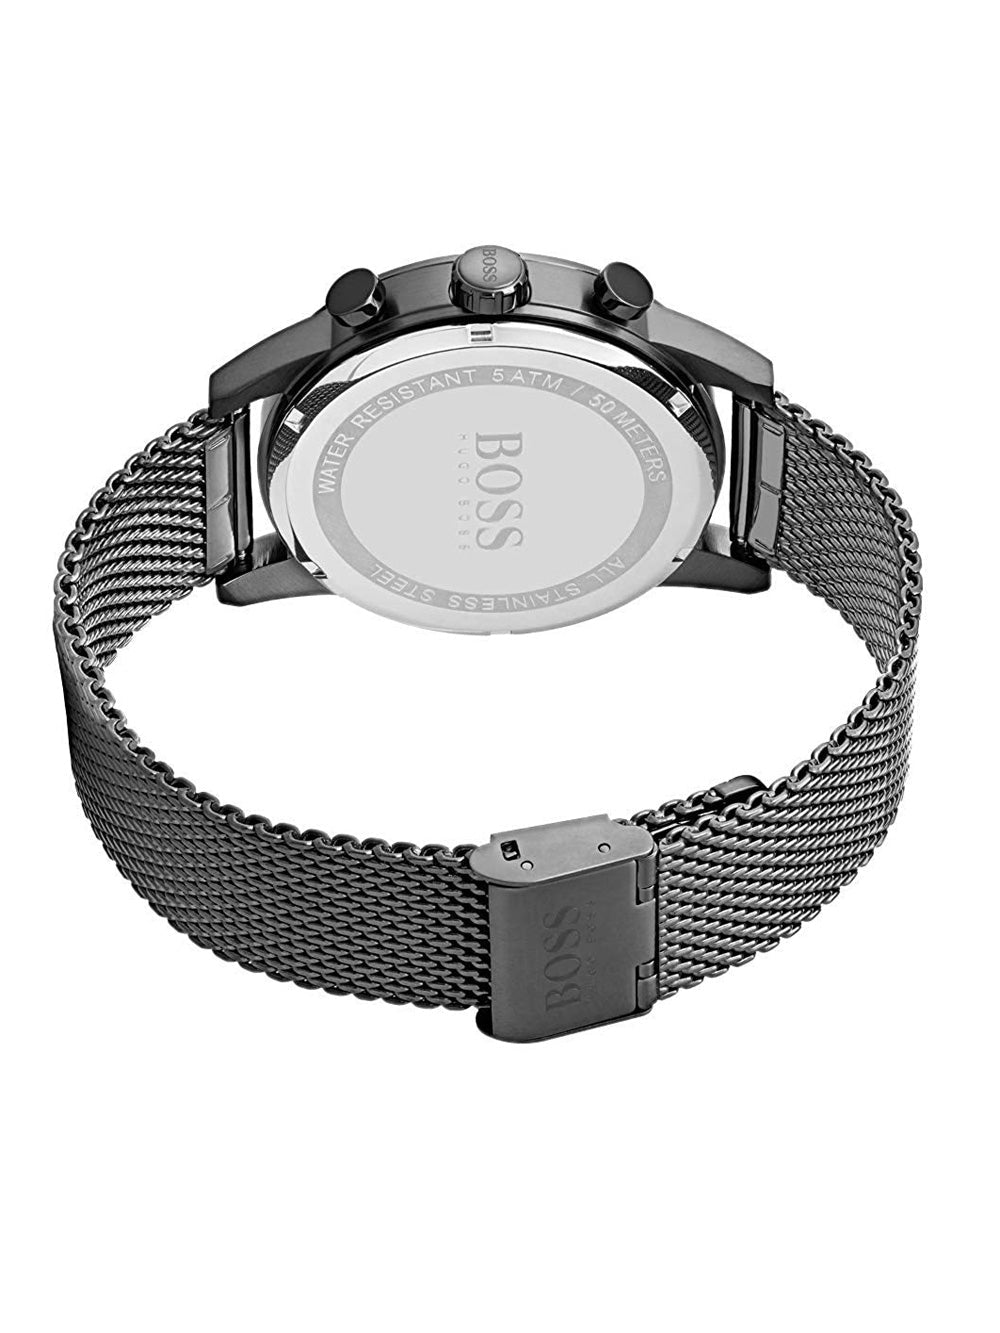 Hugo Boss Navigator Grey Dial Grey Mesh Bracelet Watch for Men - 1513674